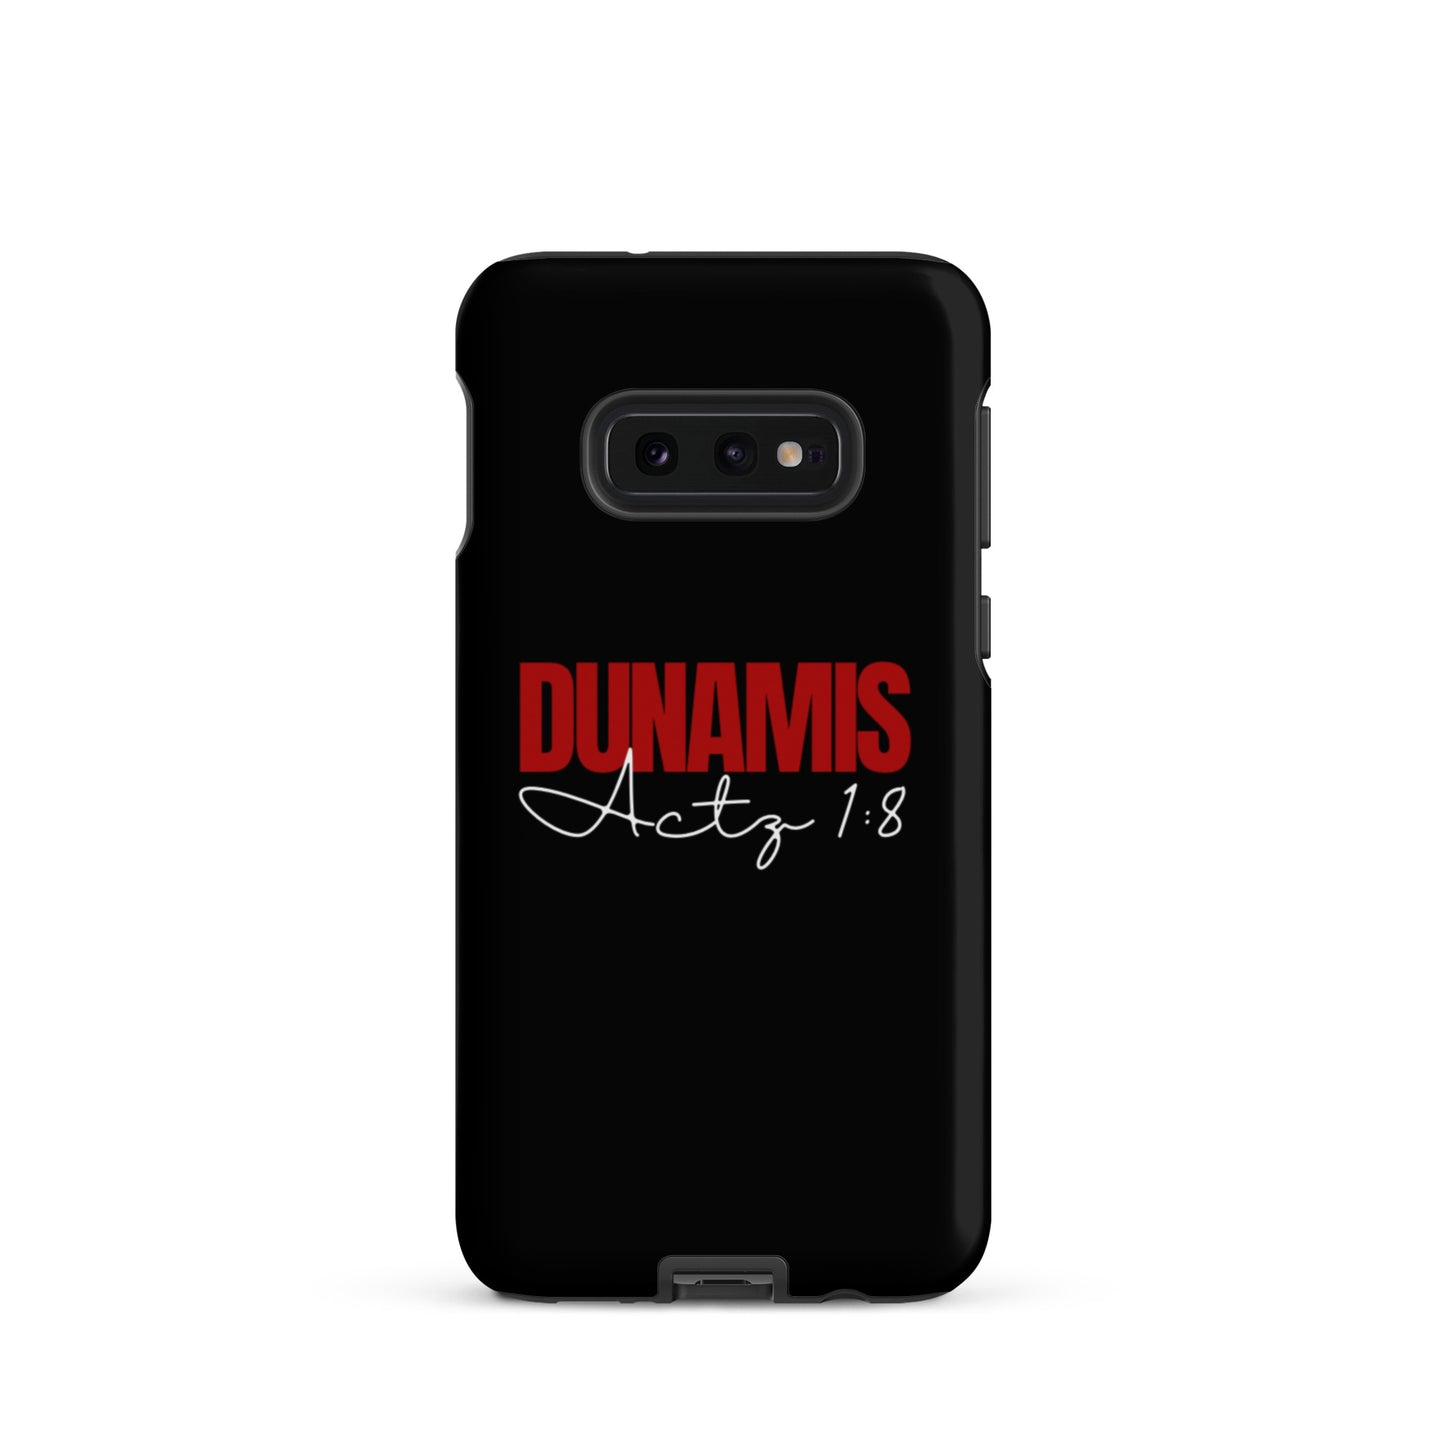 Dunamis Actz Tough case for Samsung®